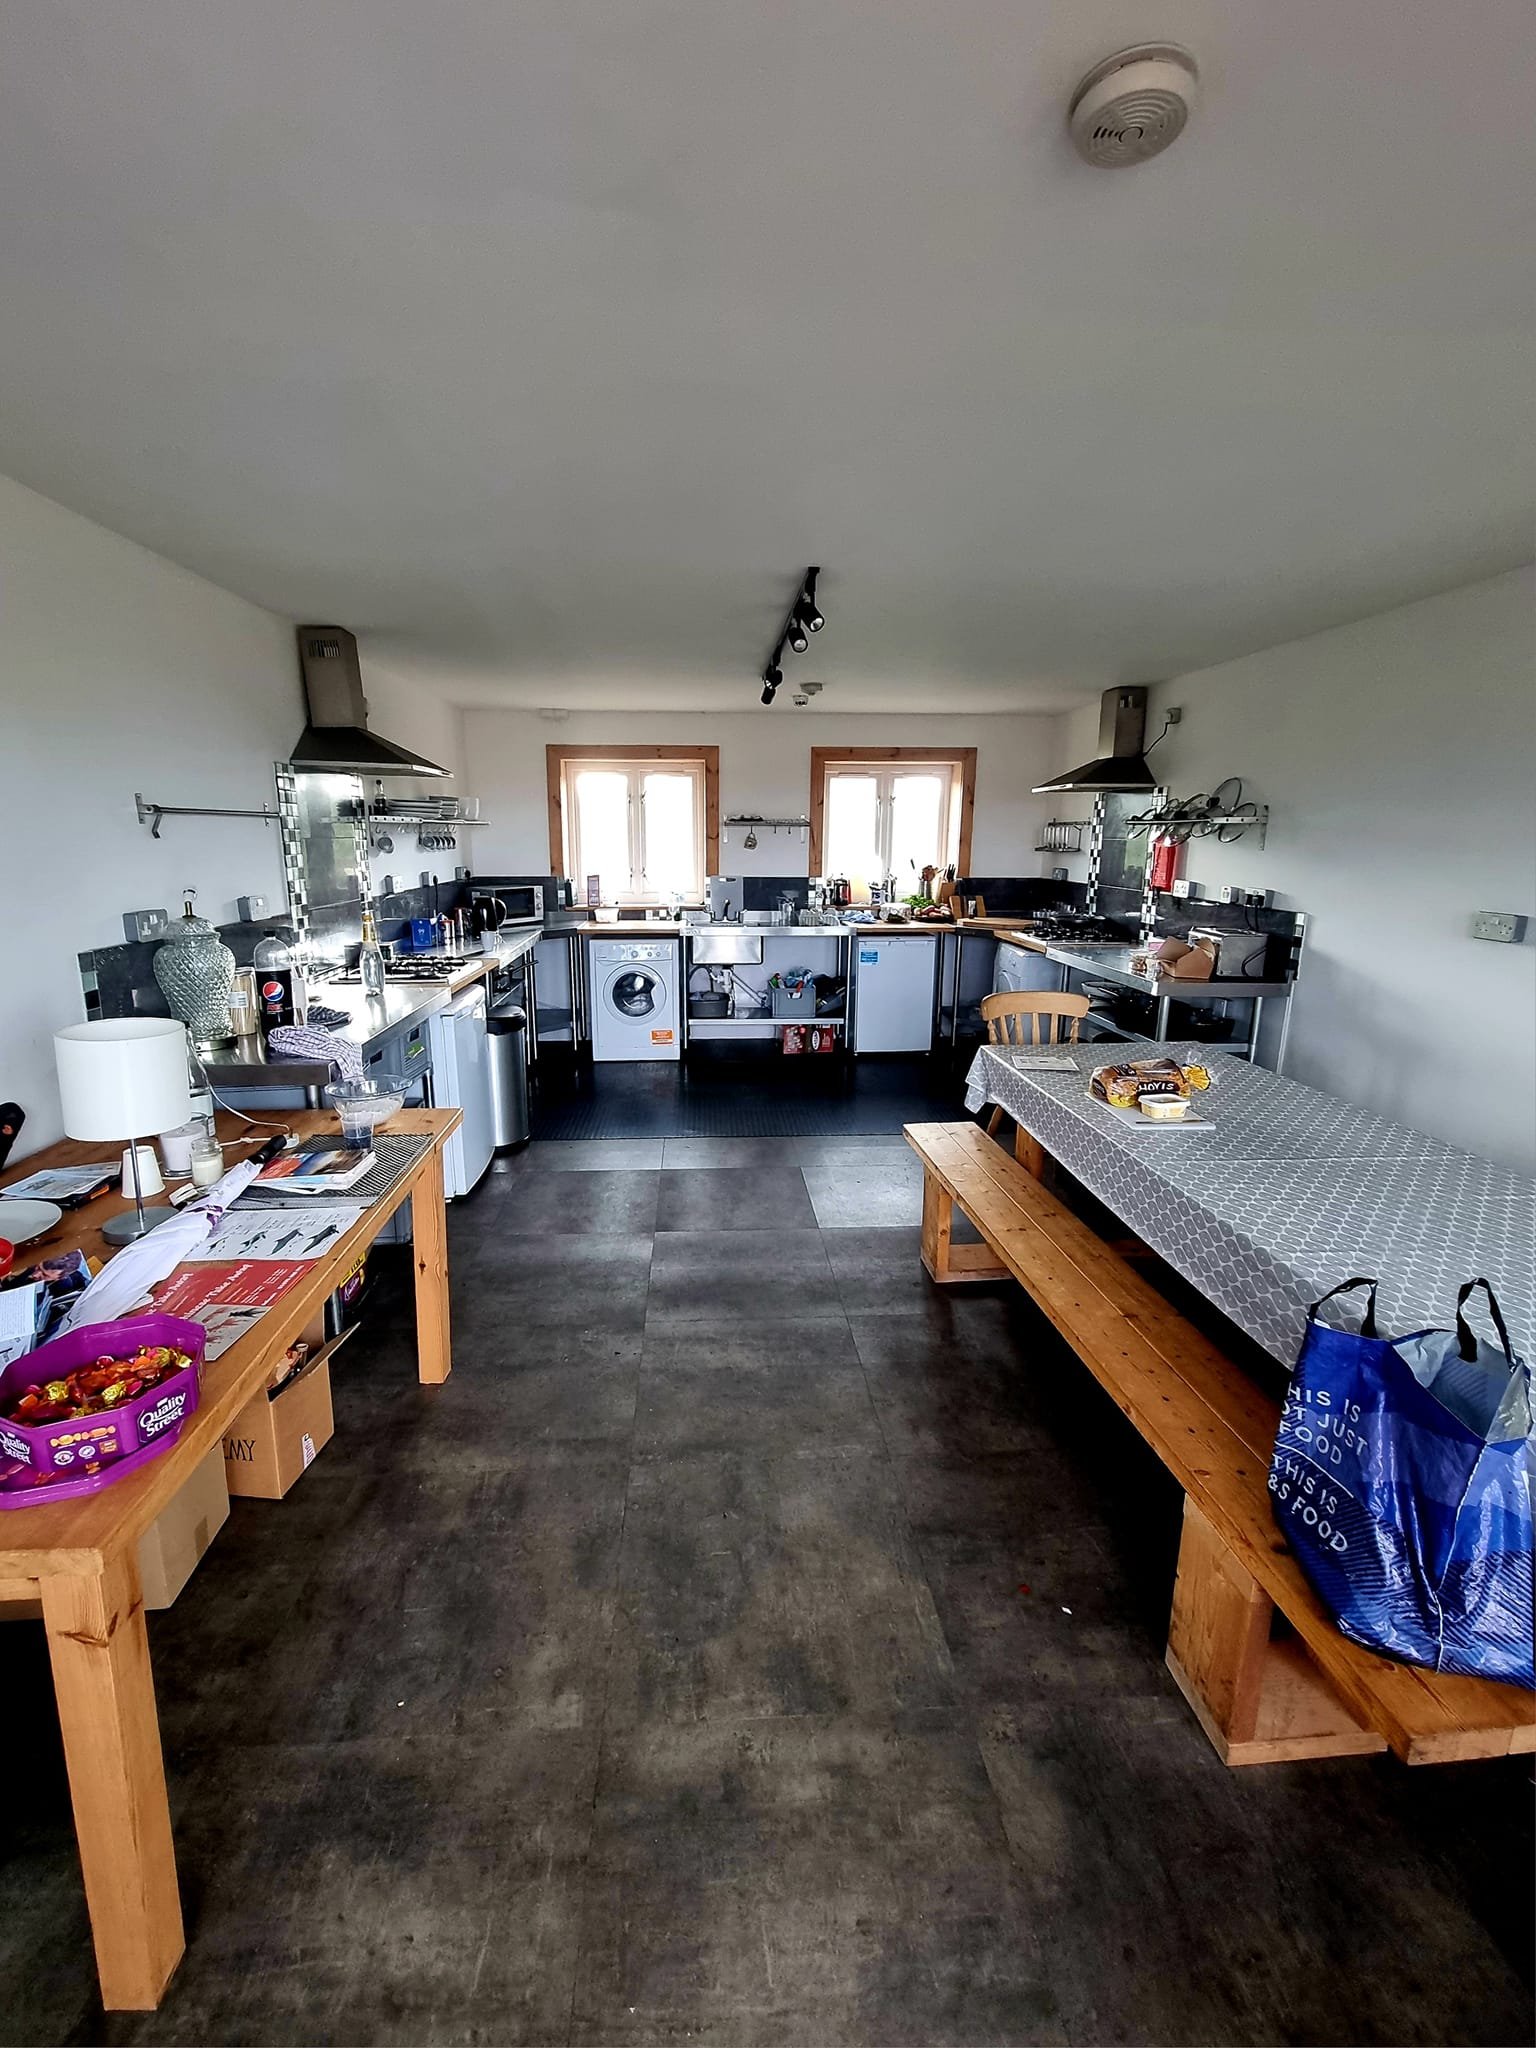 creel yard kitchen interior.jpg